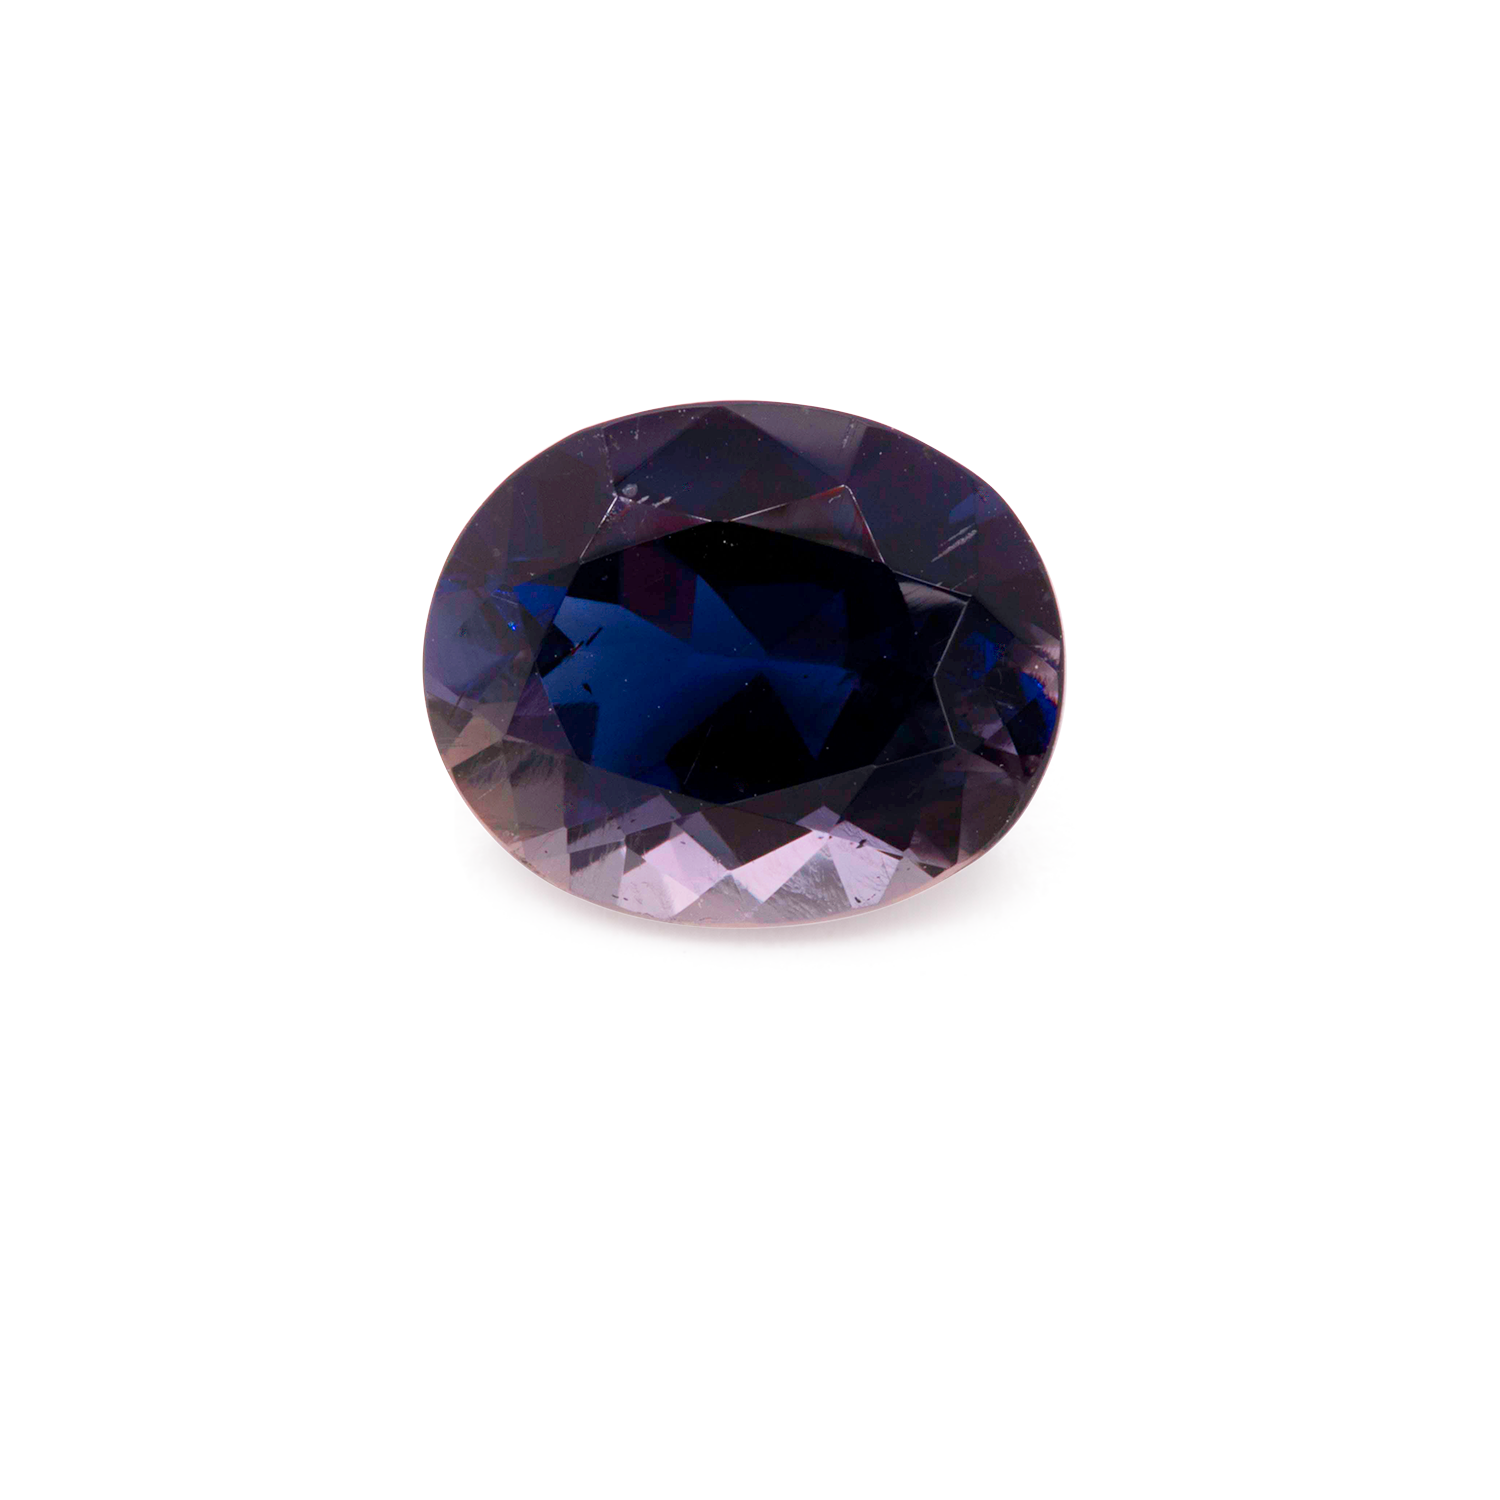 Iolite - blue/purple, oval, 11x9 mm, 3.26 cts, No. IOL19001